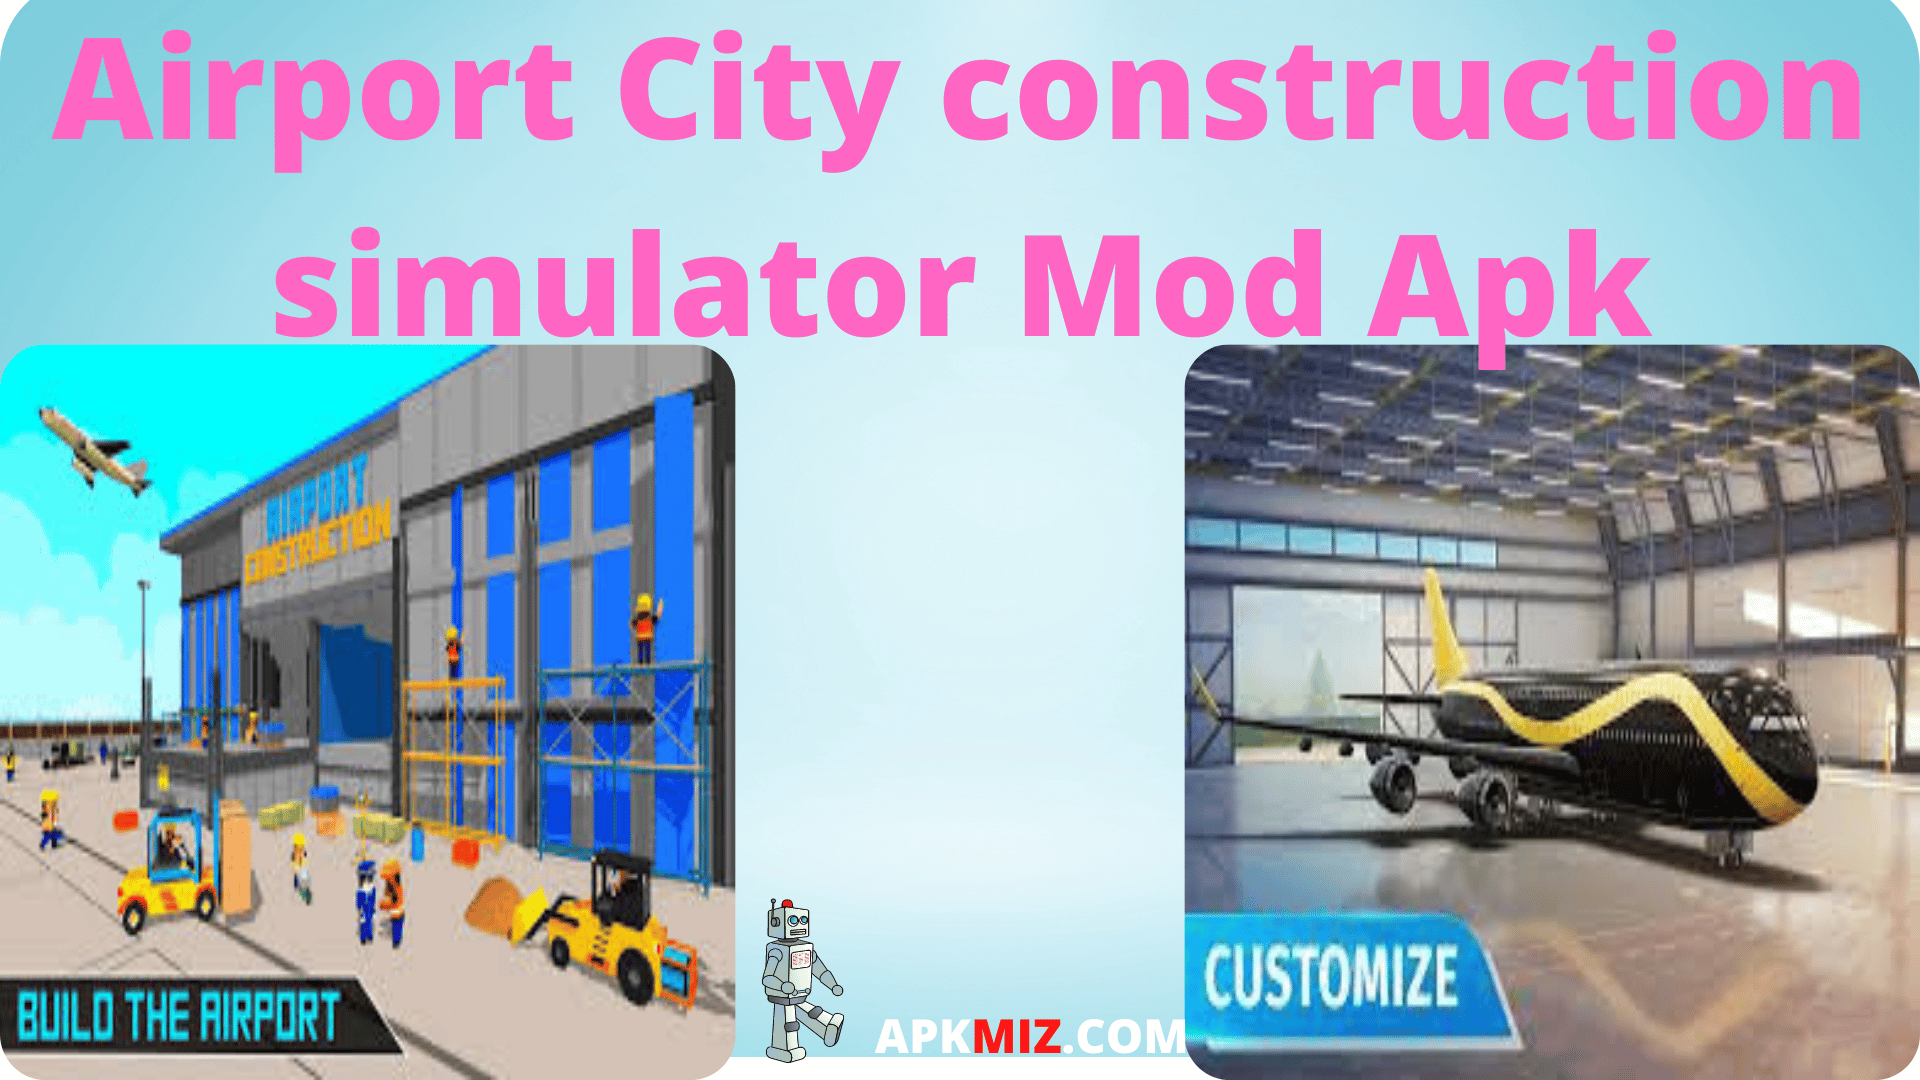 Airport City Construction Simulator Mod Apk